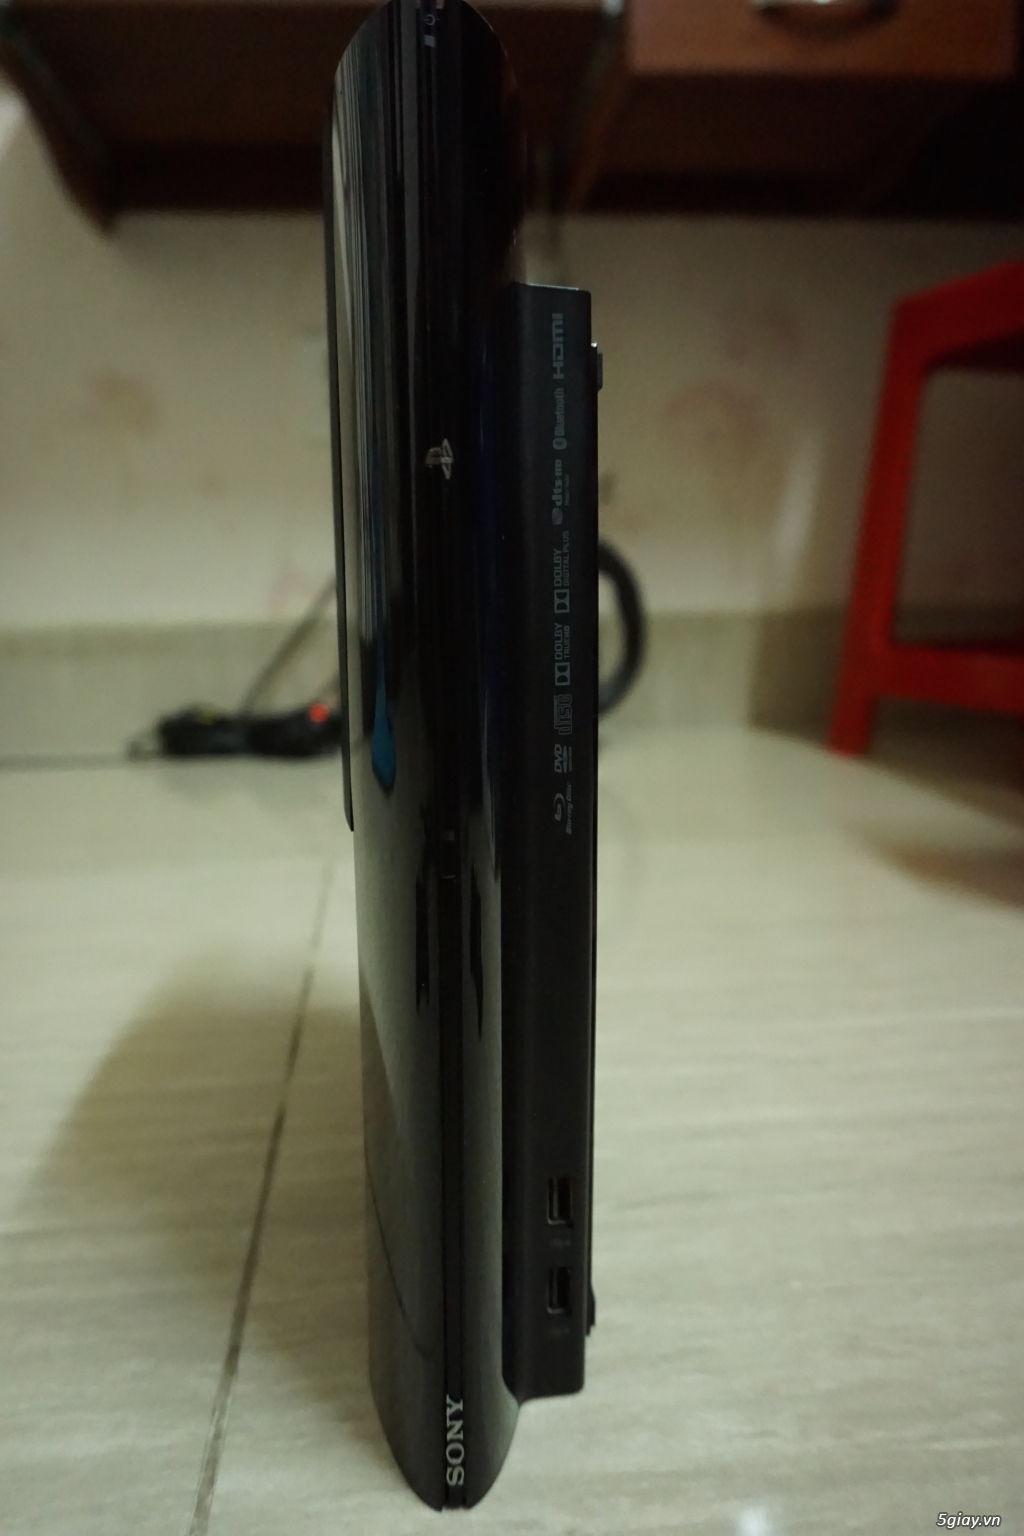 Bán PS3 Super Slim 500GB Zin mới 99% - 4